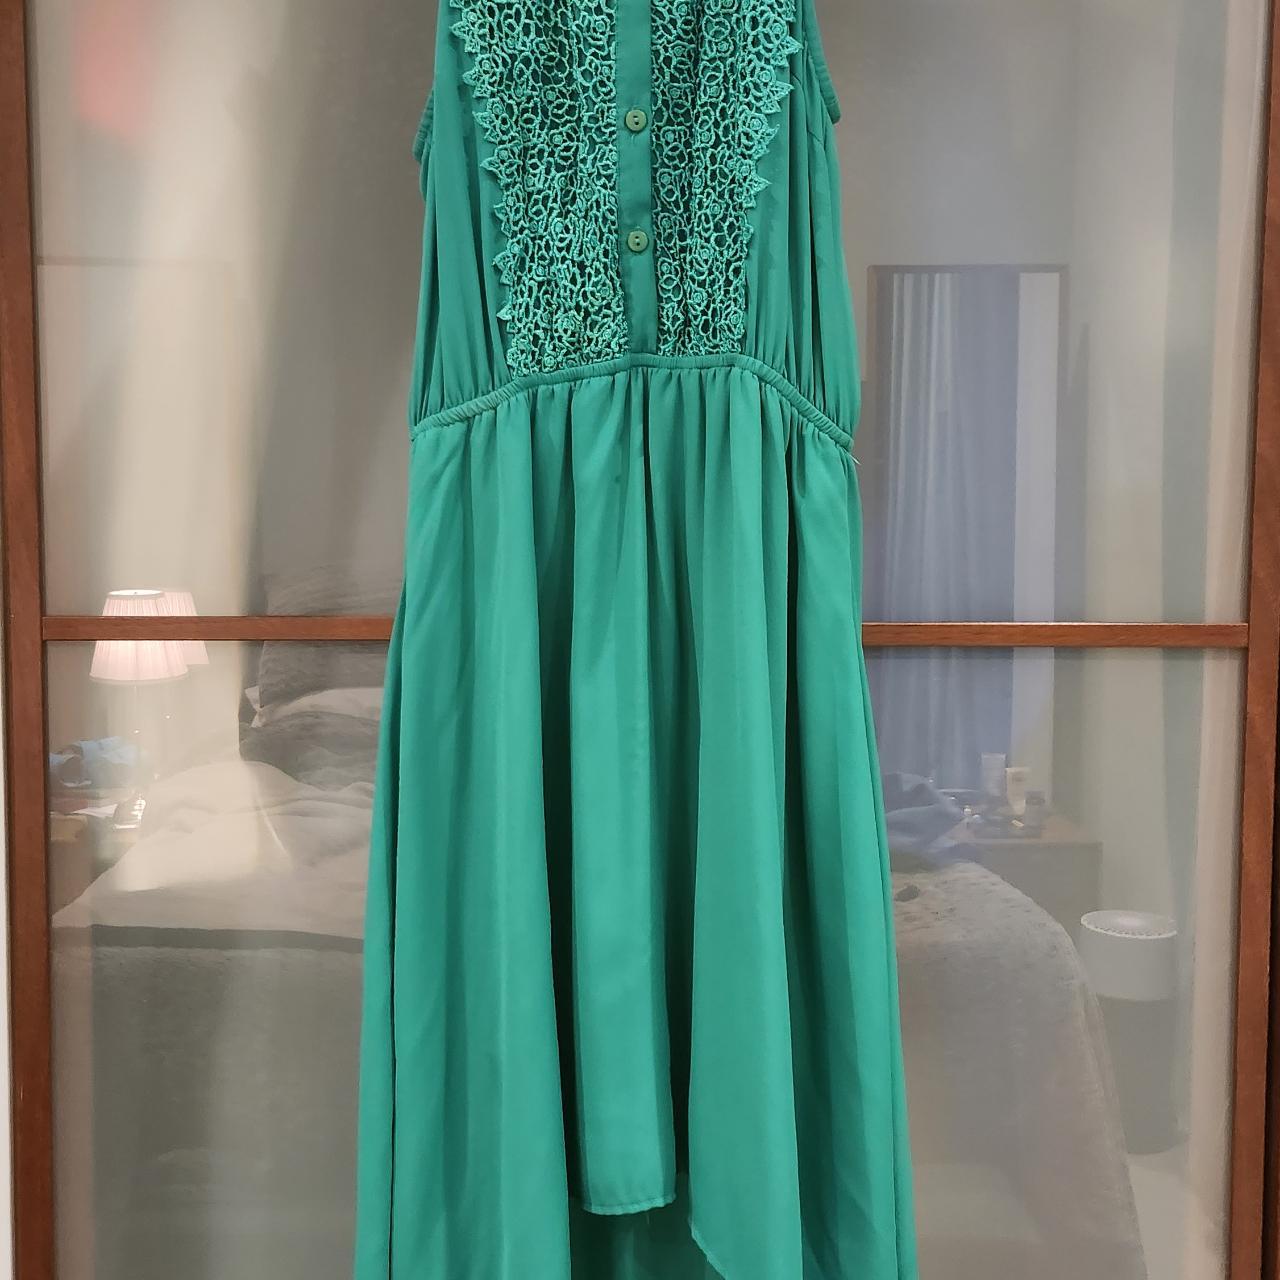 Semiformal green dress with lace appliqué details.... - Depop